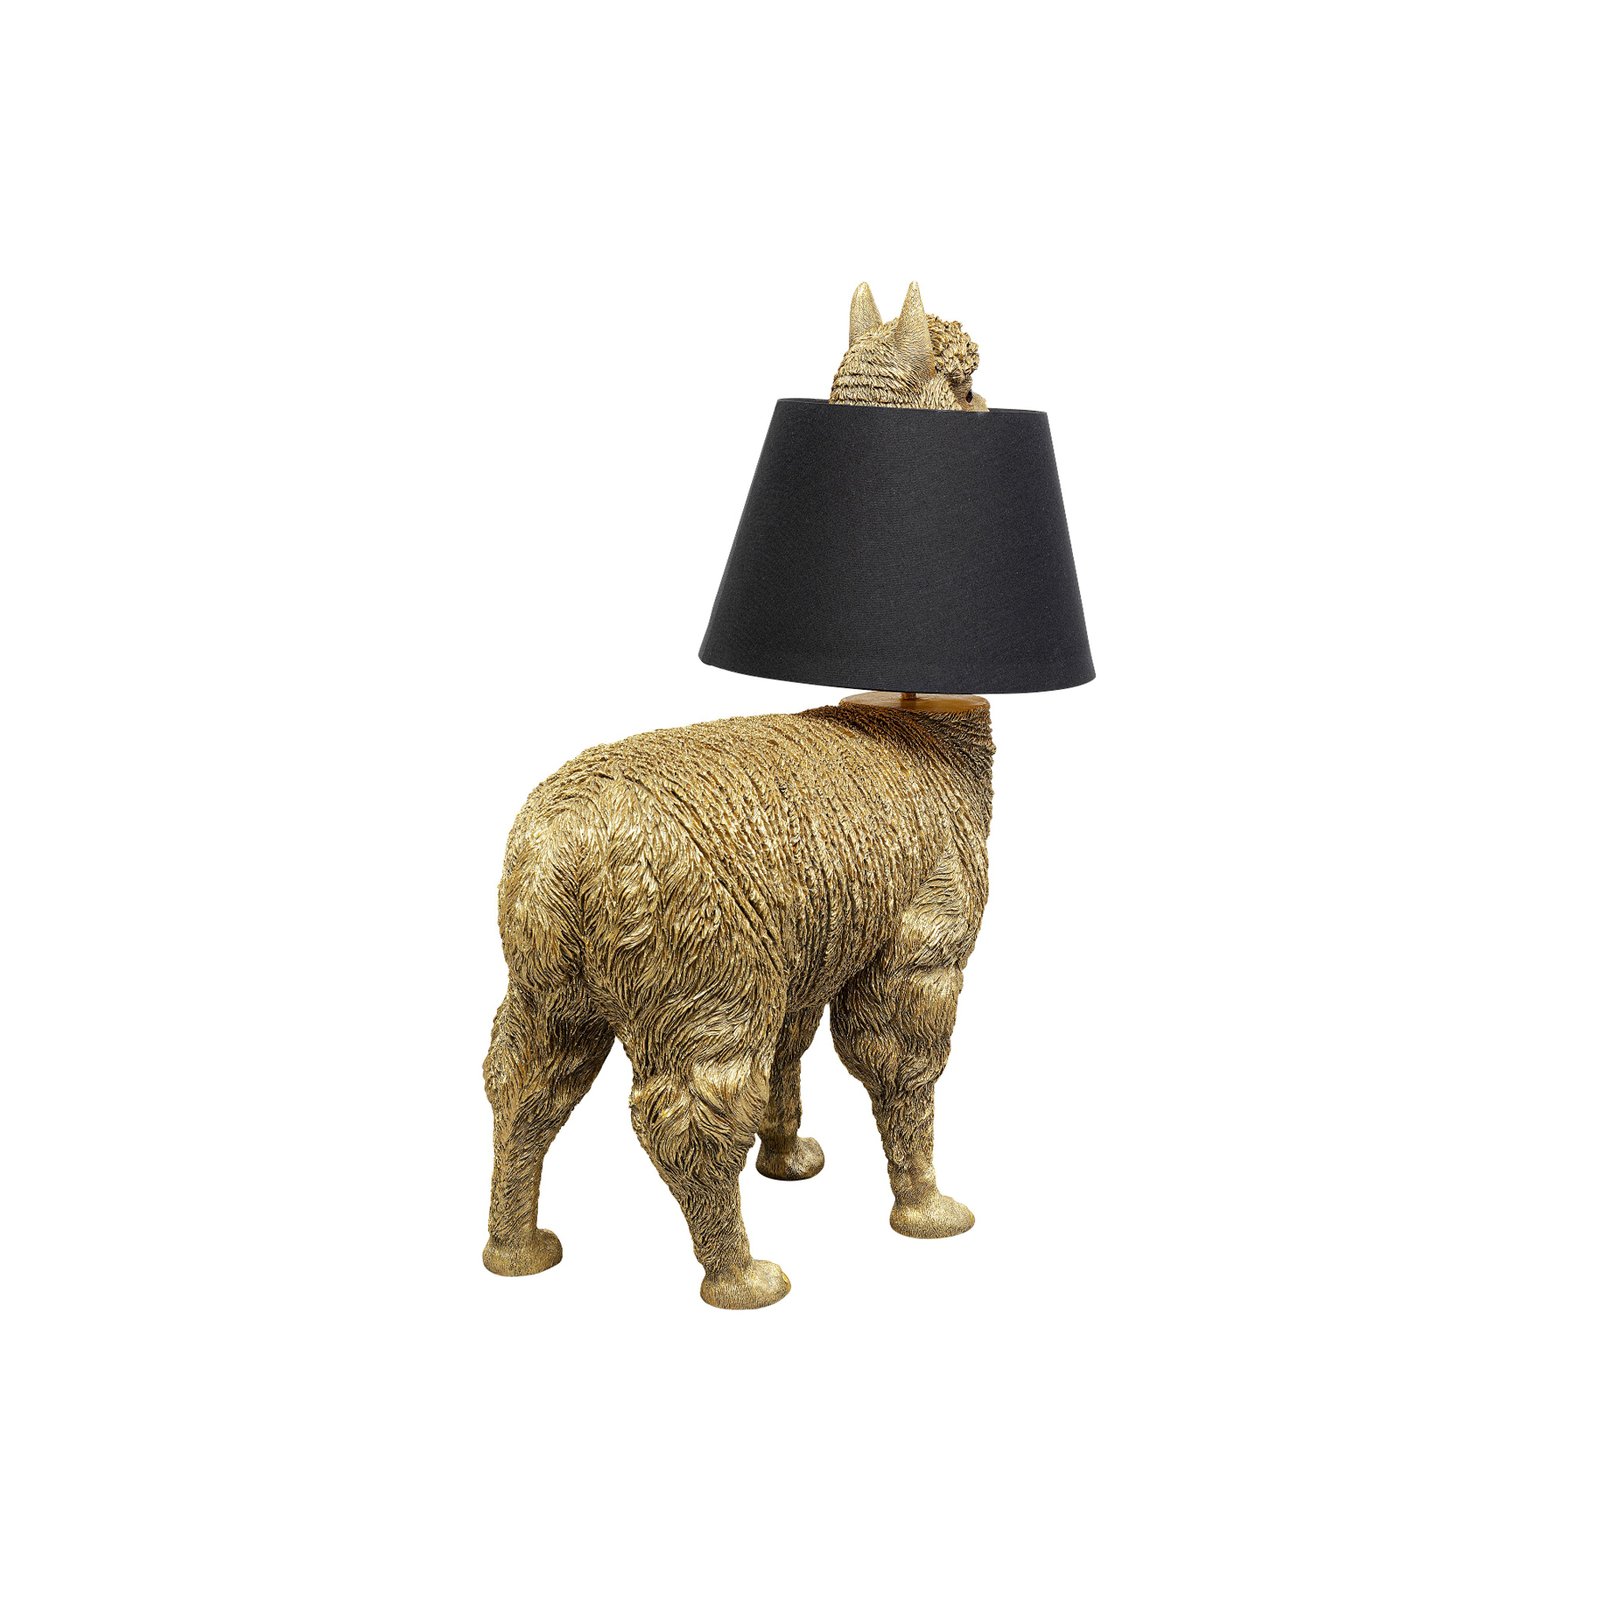 KARE Bordslampa Alpaca, guld, brun lampskärm i textil